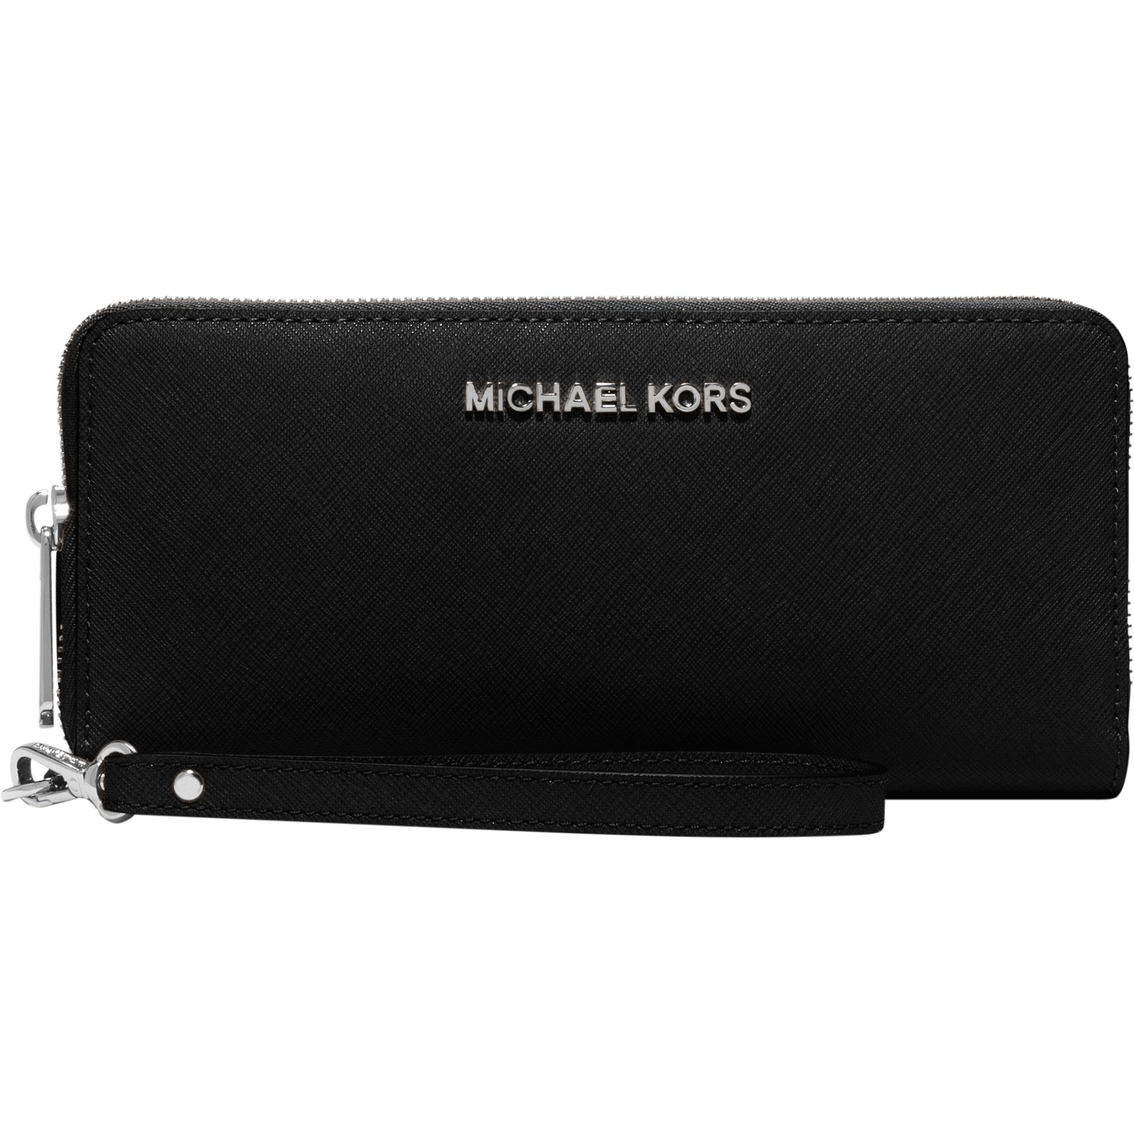 Michael Kors Jet Set Travel Continental Wallet | Wallets | Handbags ...